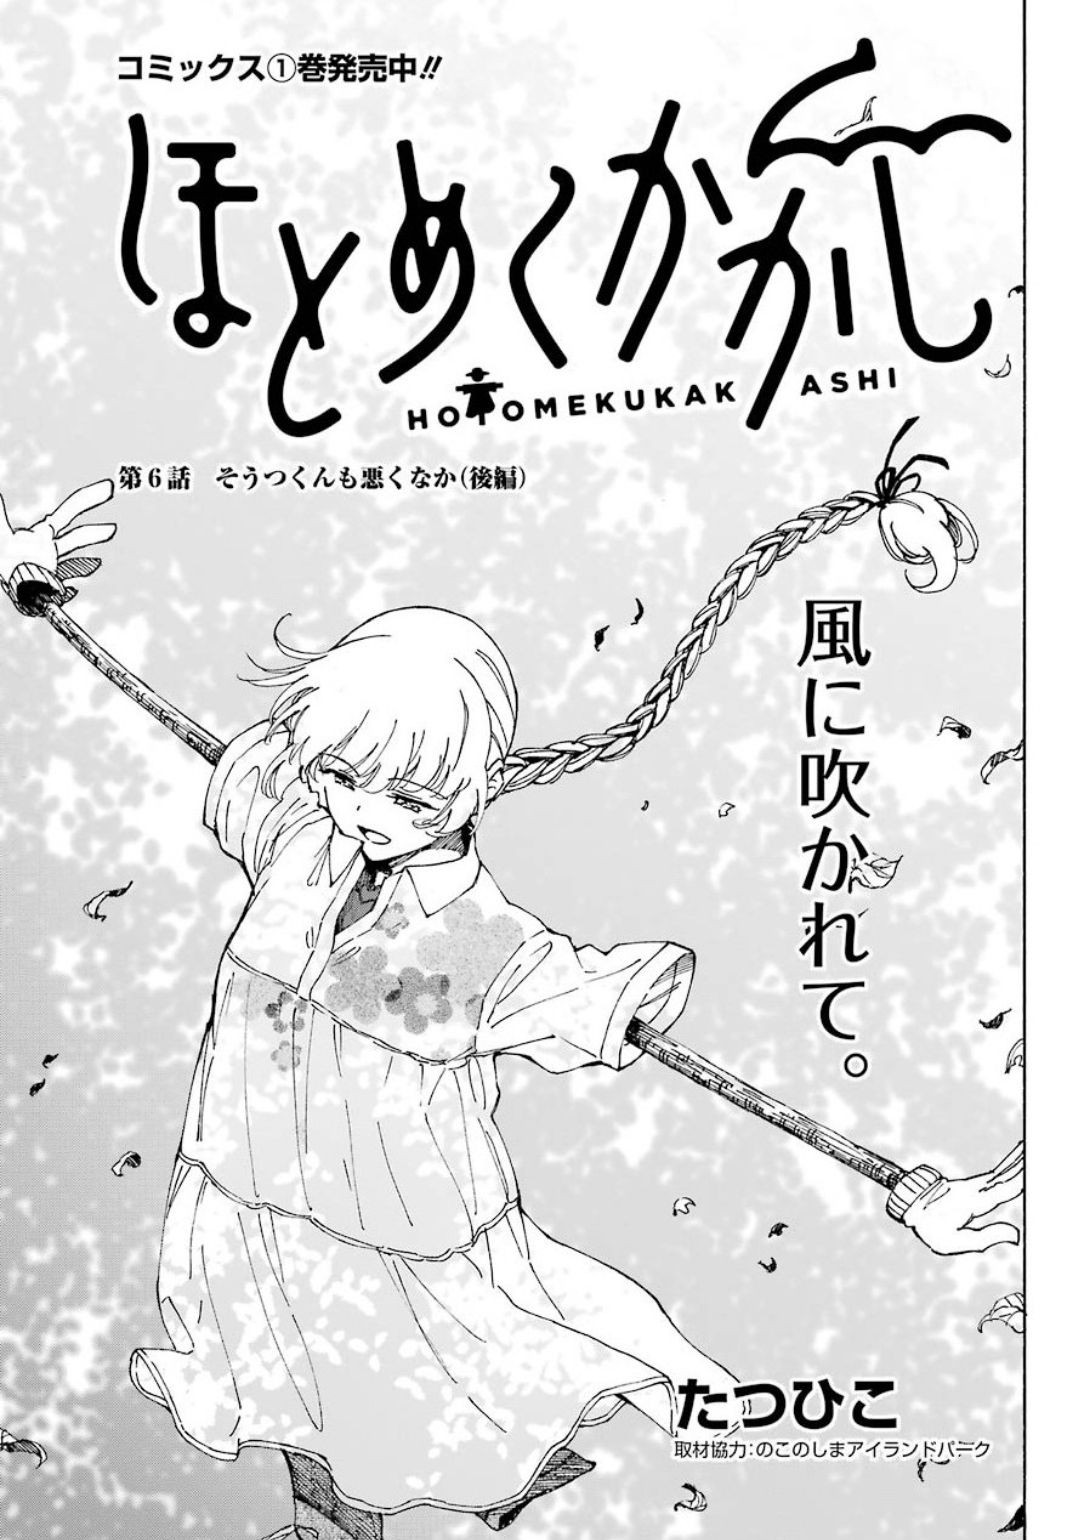 Hotomeku-kakashi - Chapter 06-2 - Page 2